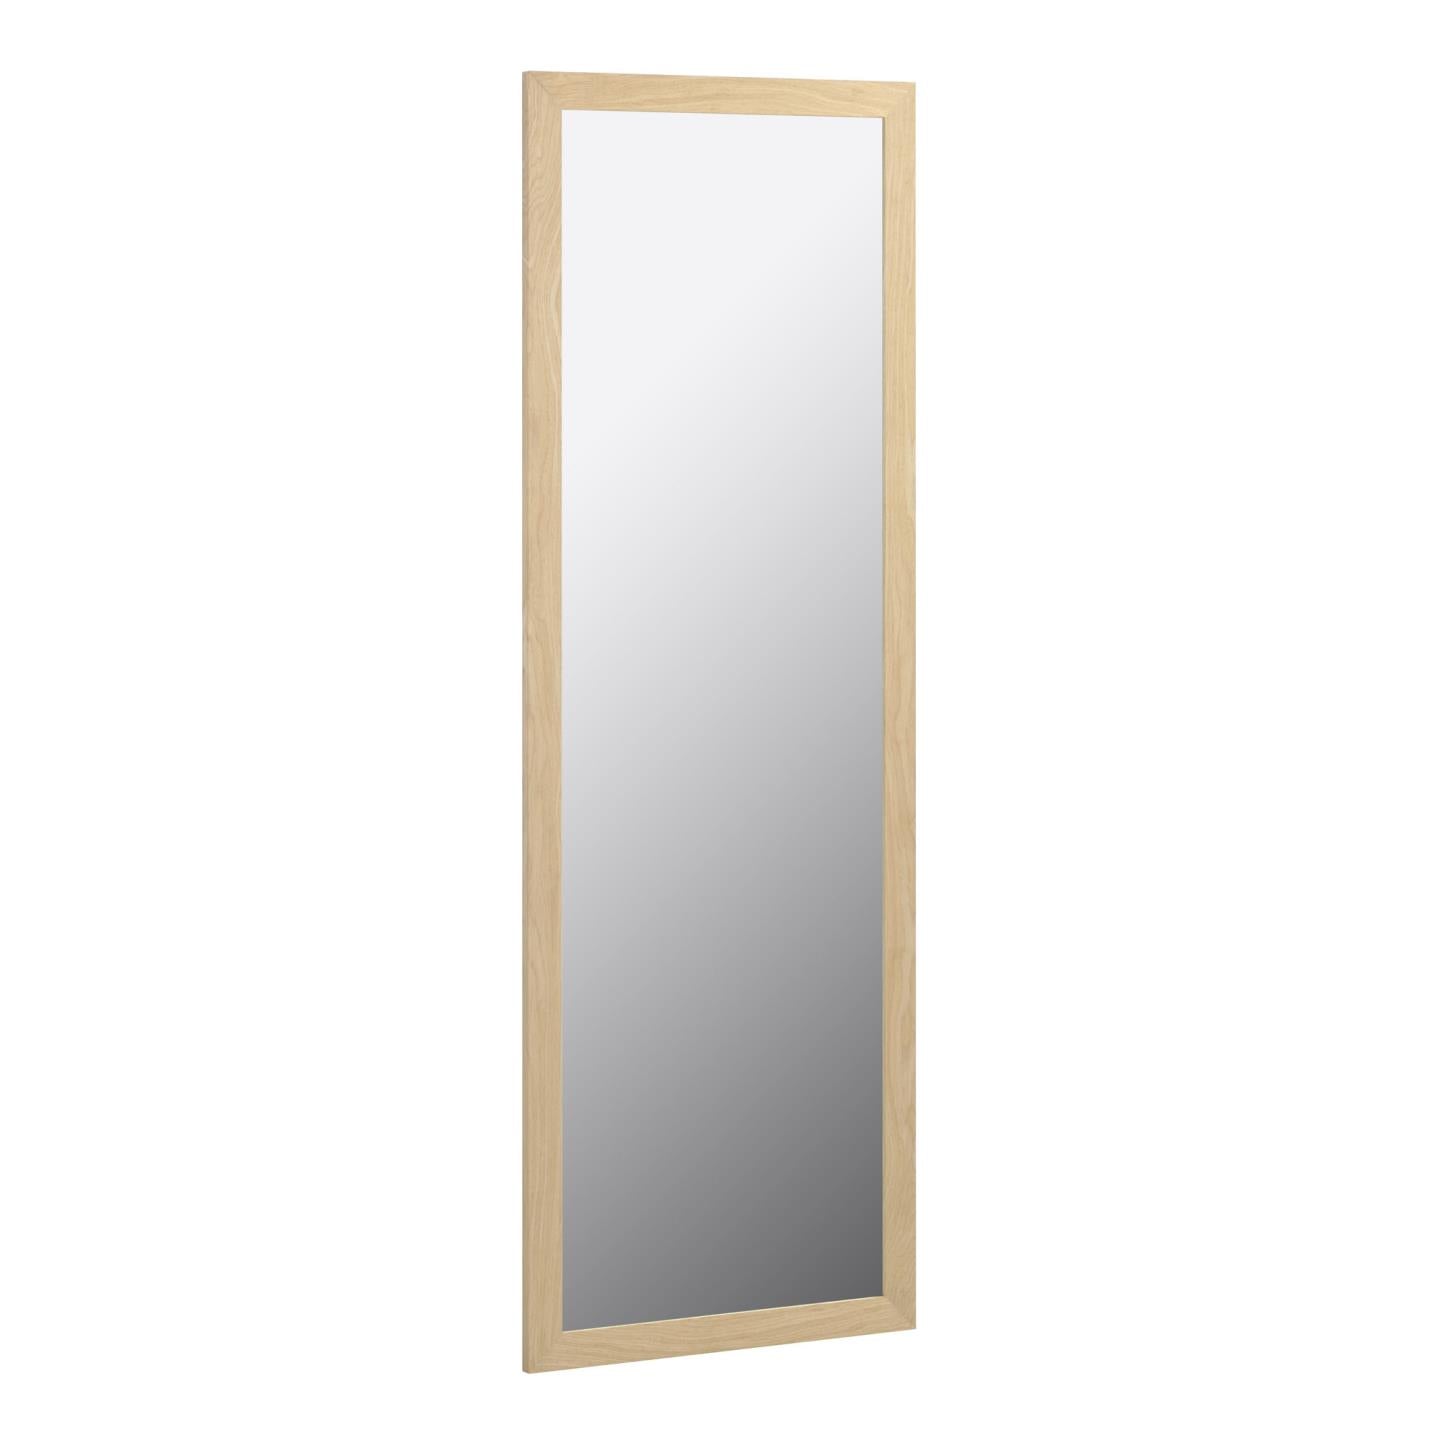 Wilany mirror natural finish 52,5 x 152,5 cm